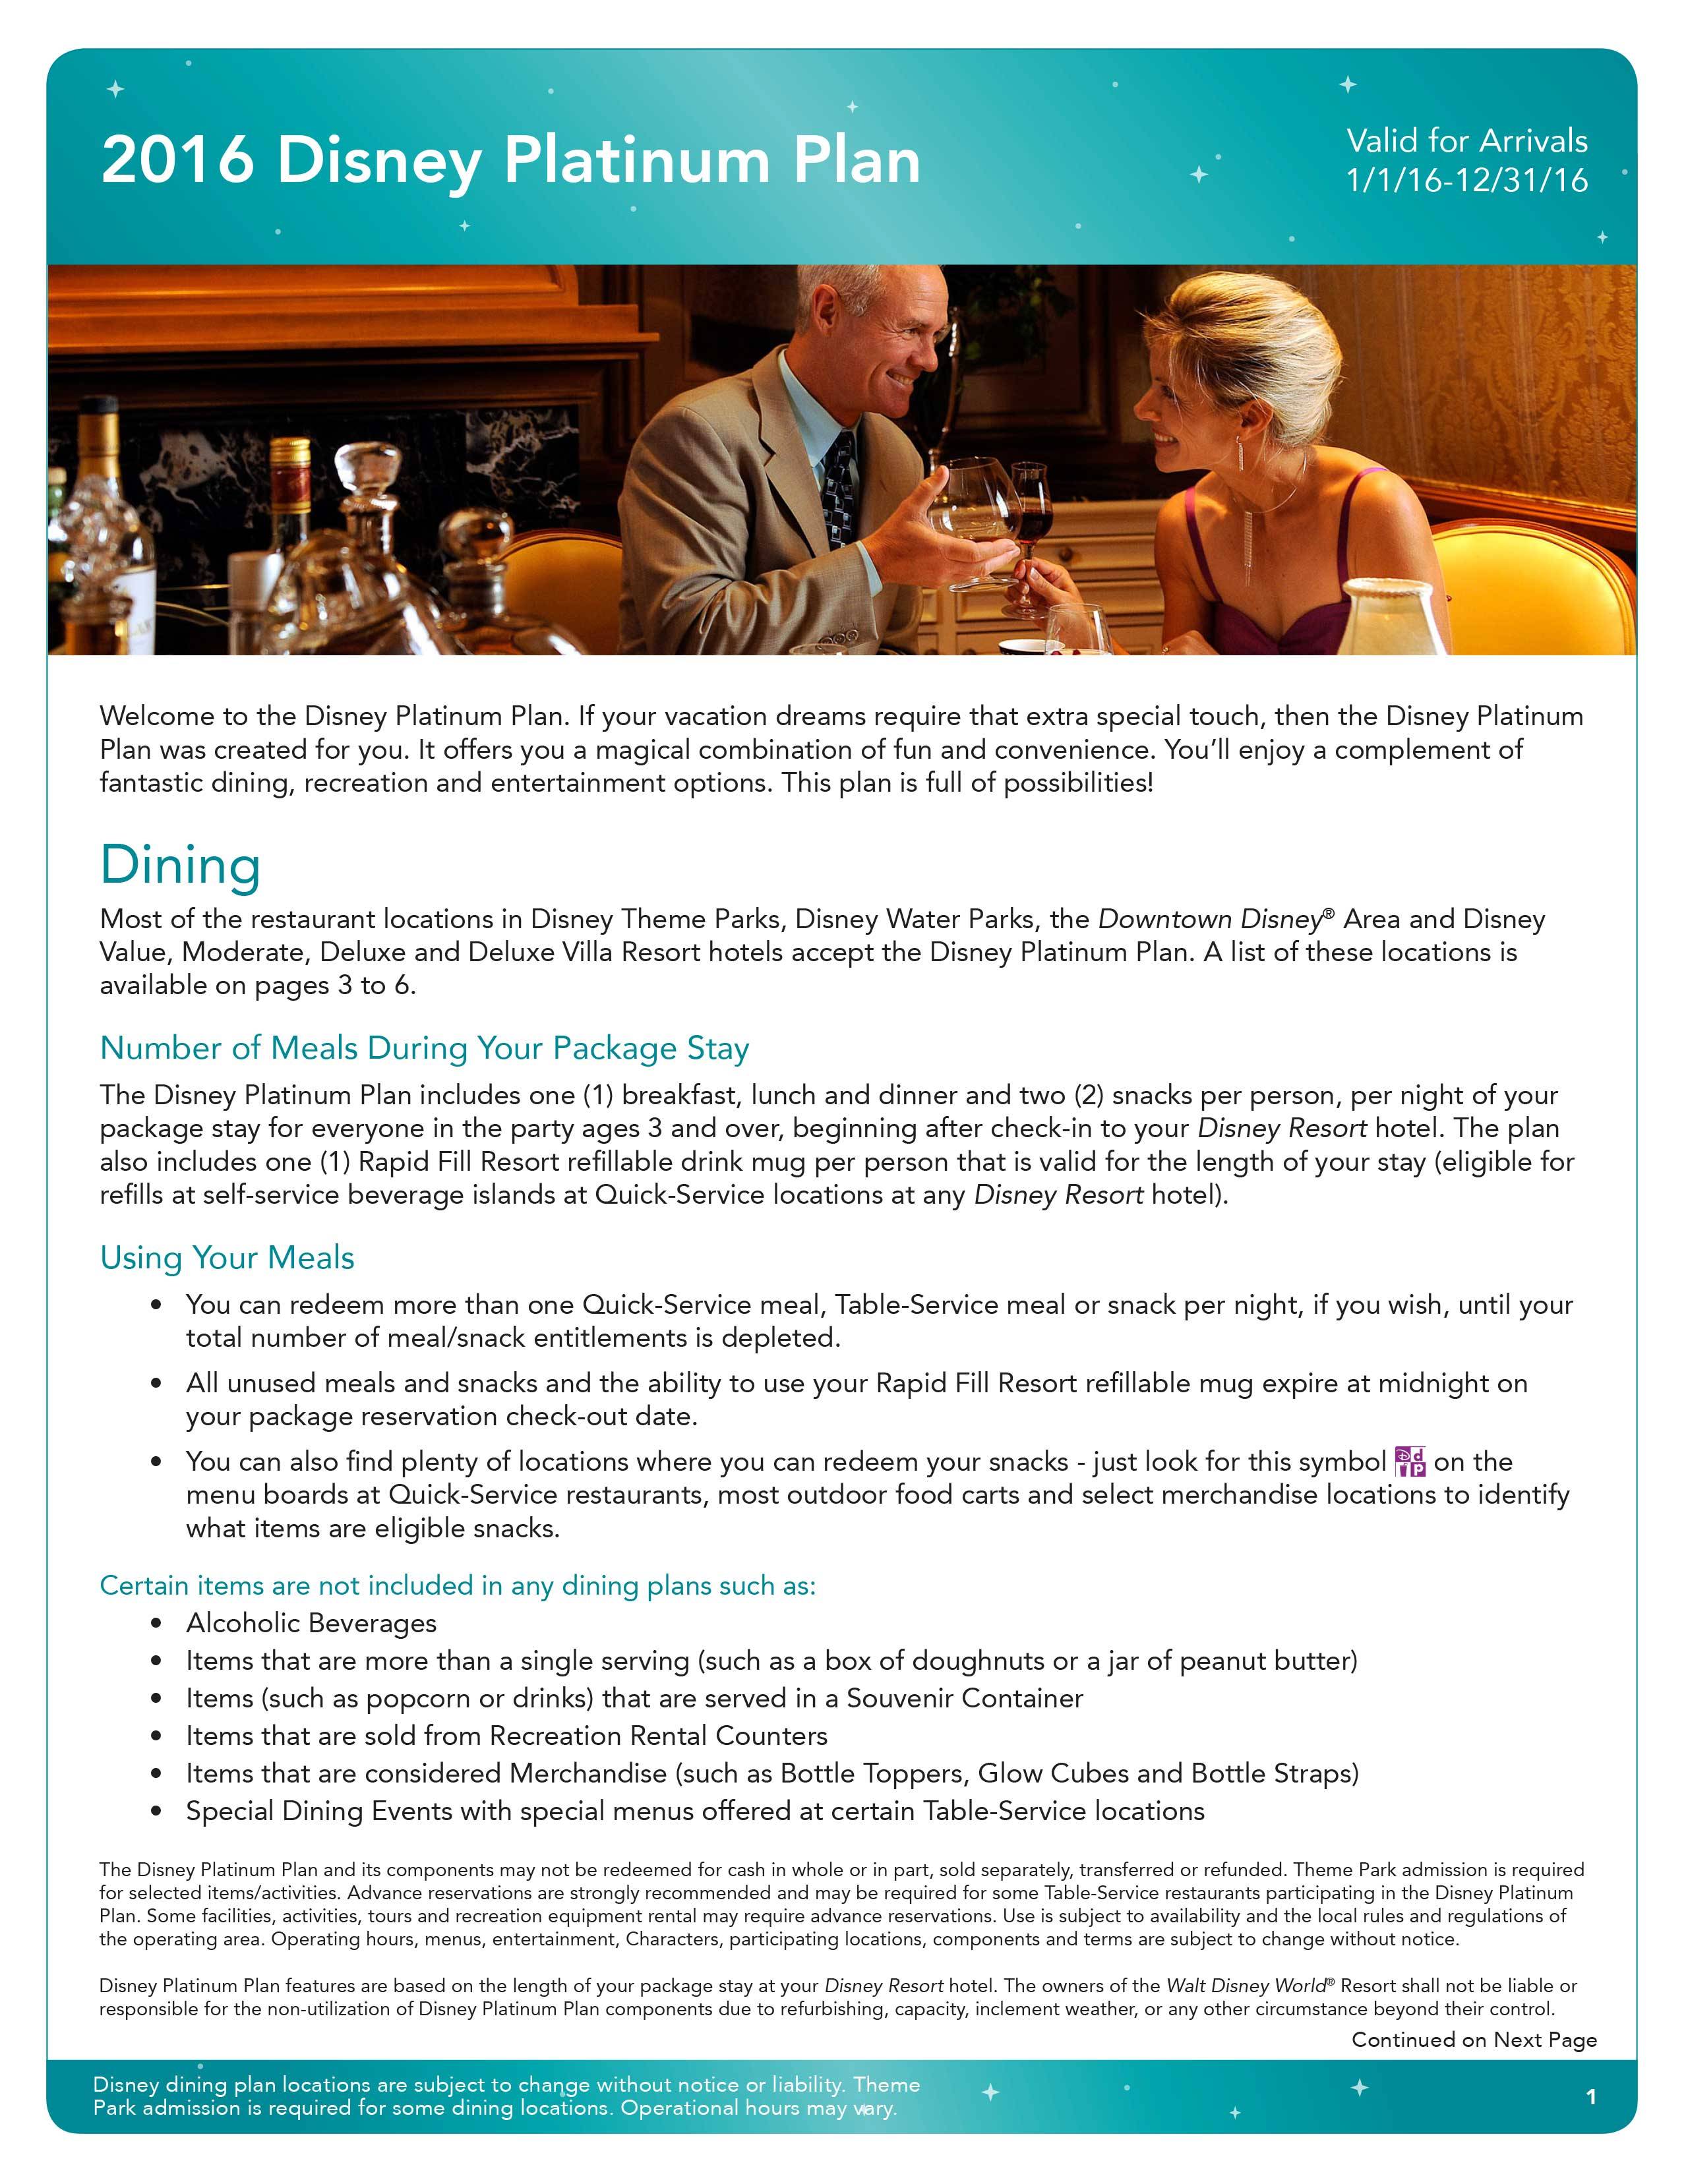 2016 Disney Platinum Dining Plan brochure - Page 1